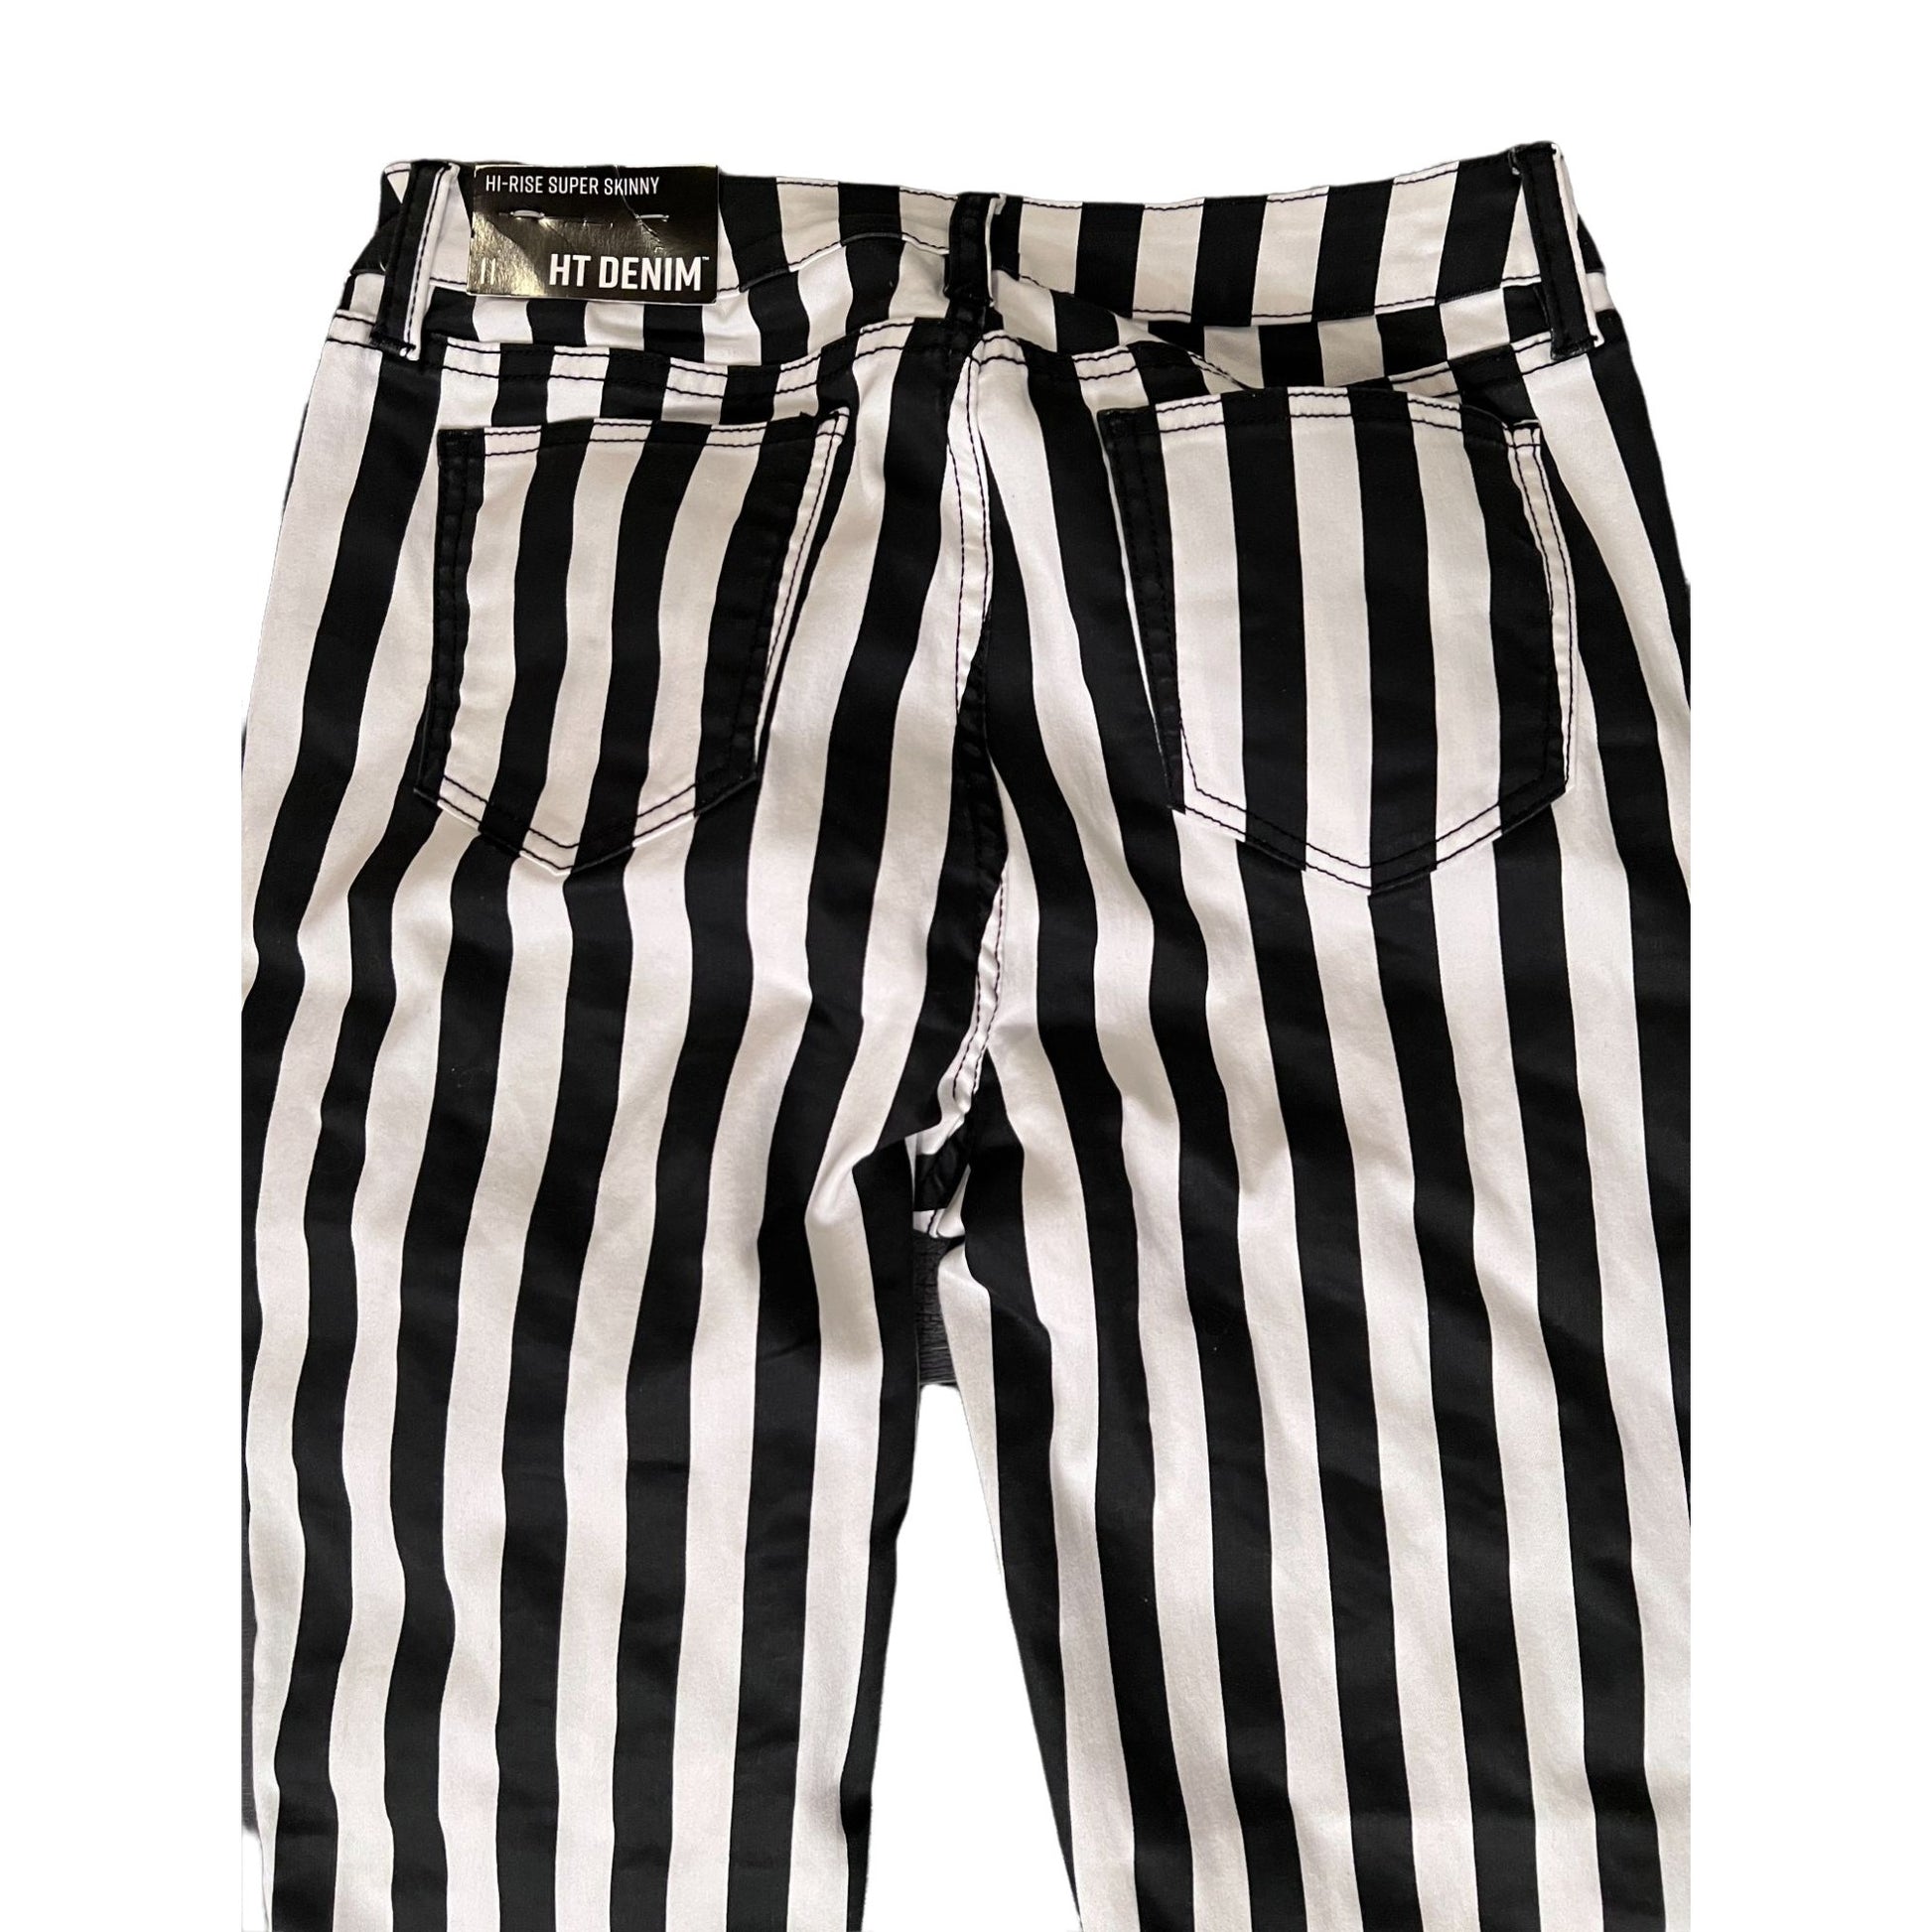 Chef Pants - Black & White Pinstripe